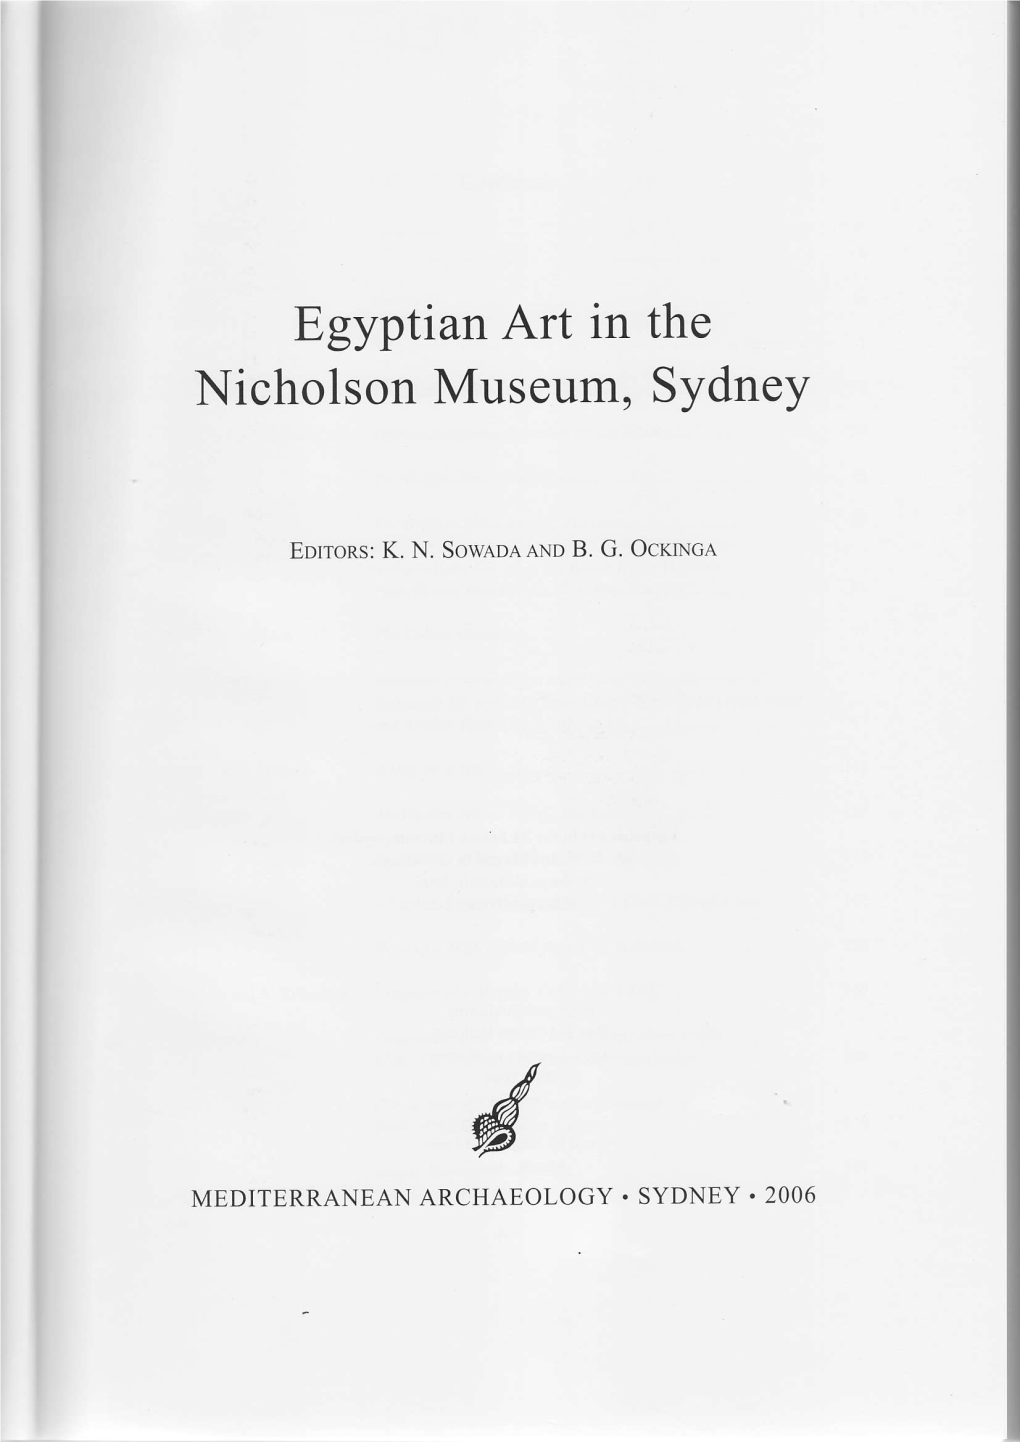 Egyptian Art in the Nicholson Museum, Sydney